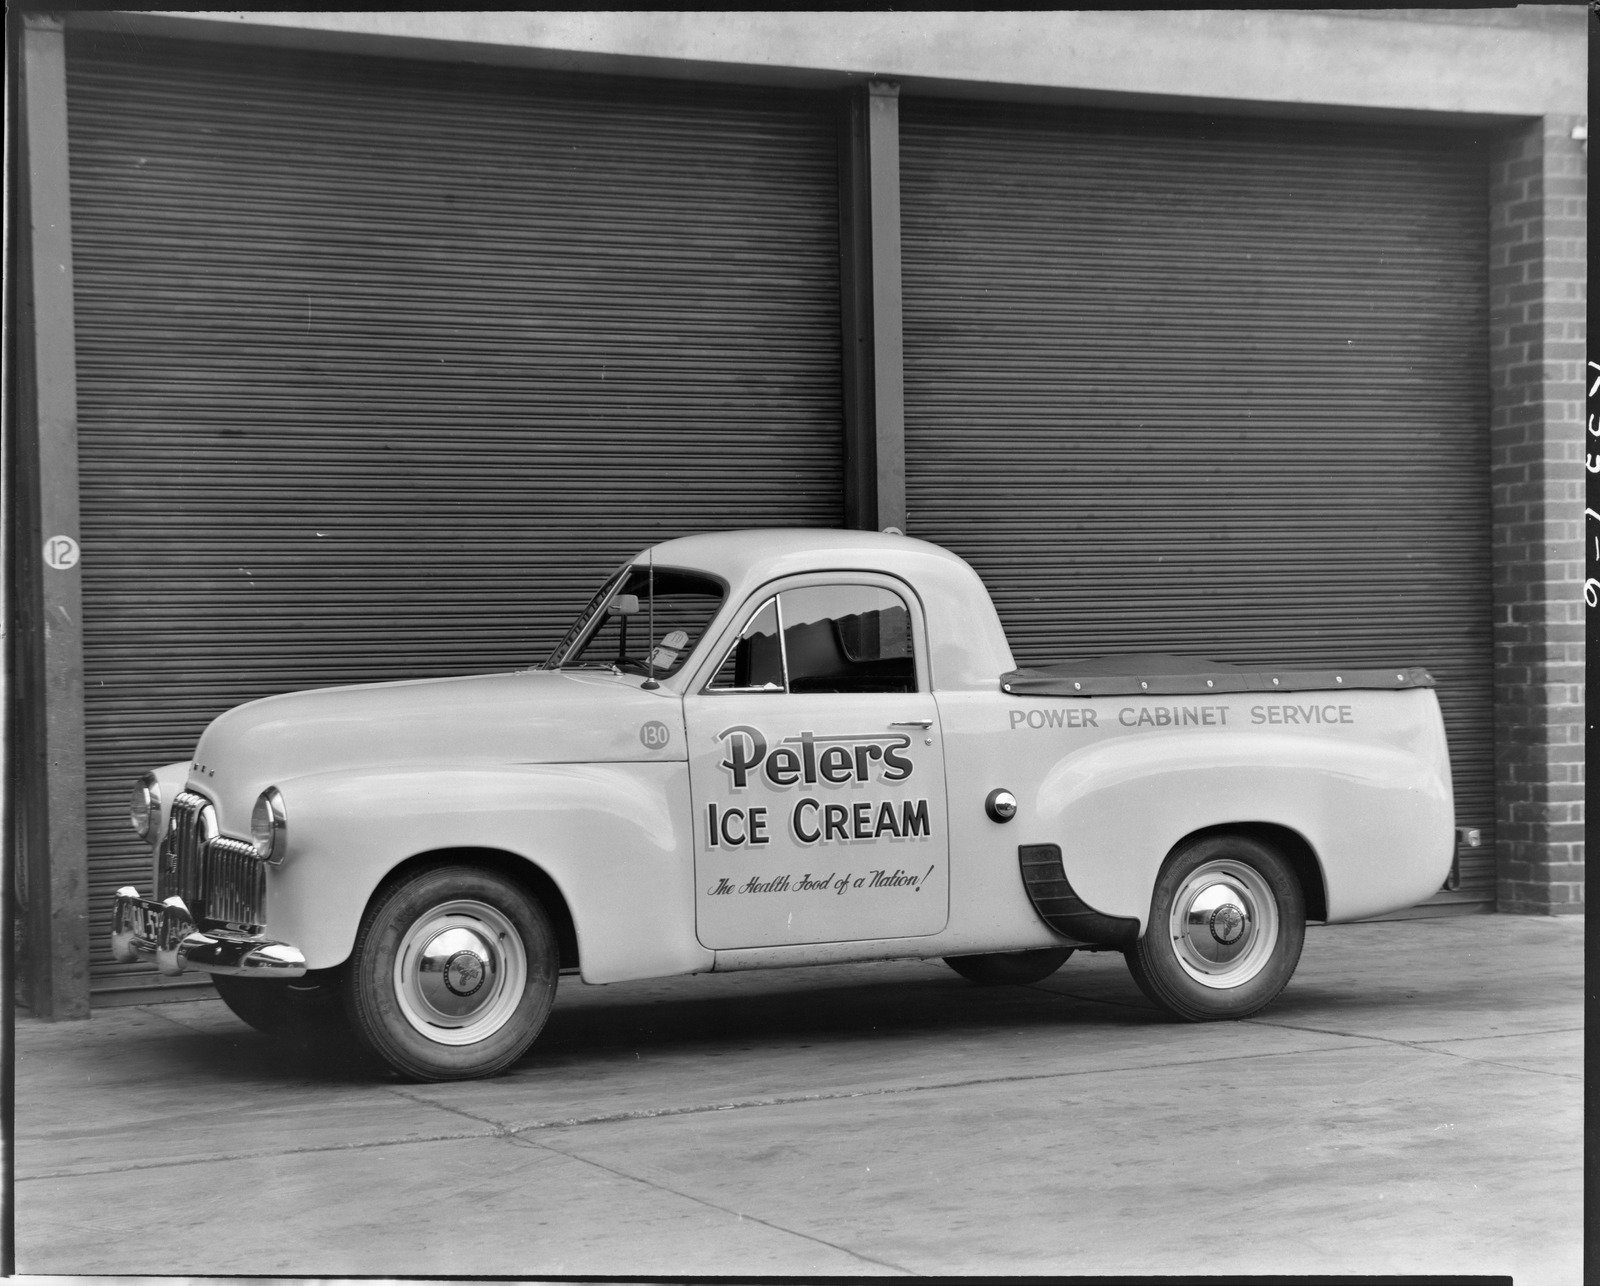 Holden utility truck bearing Peters Ice cream logo